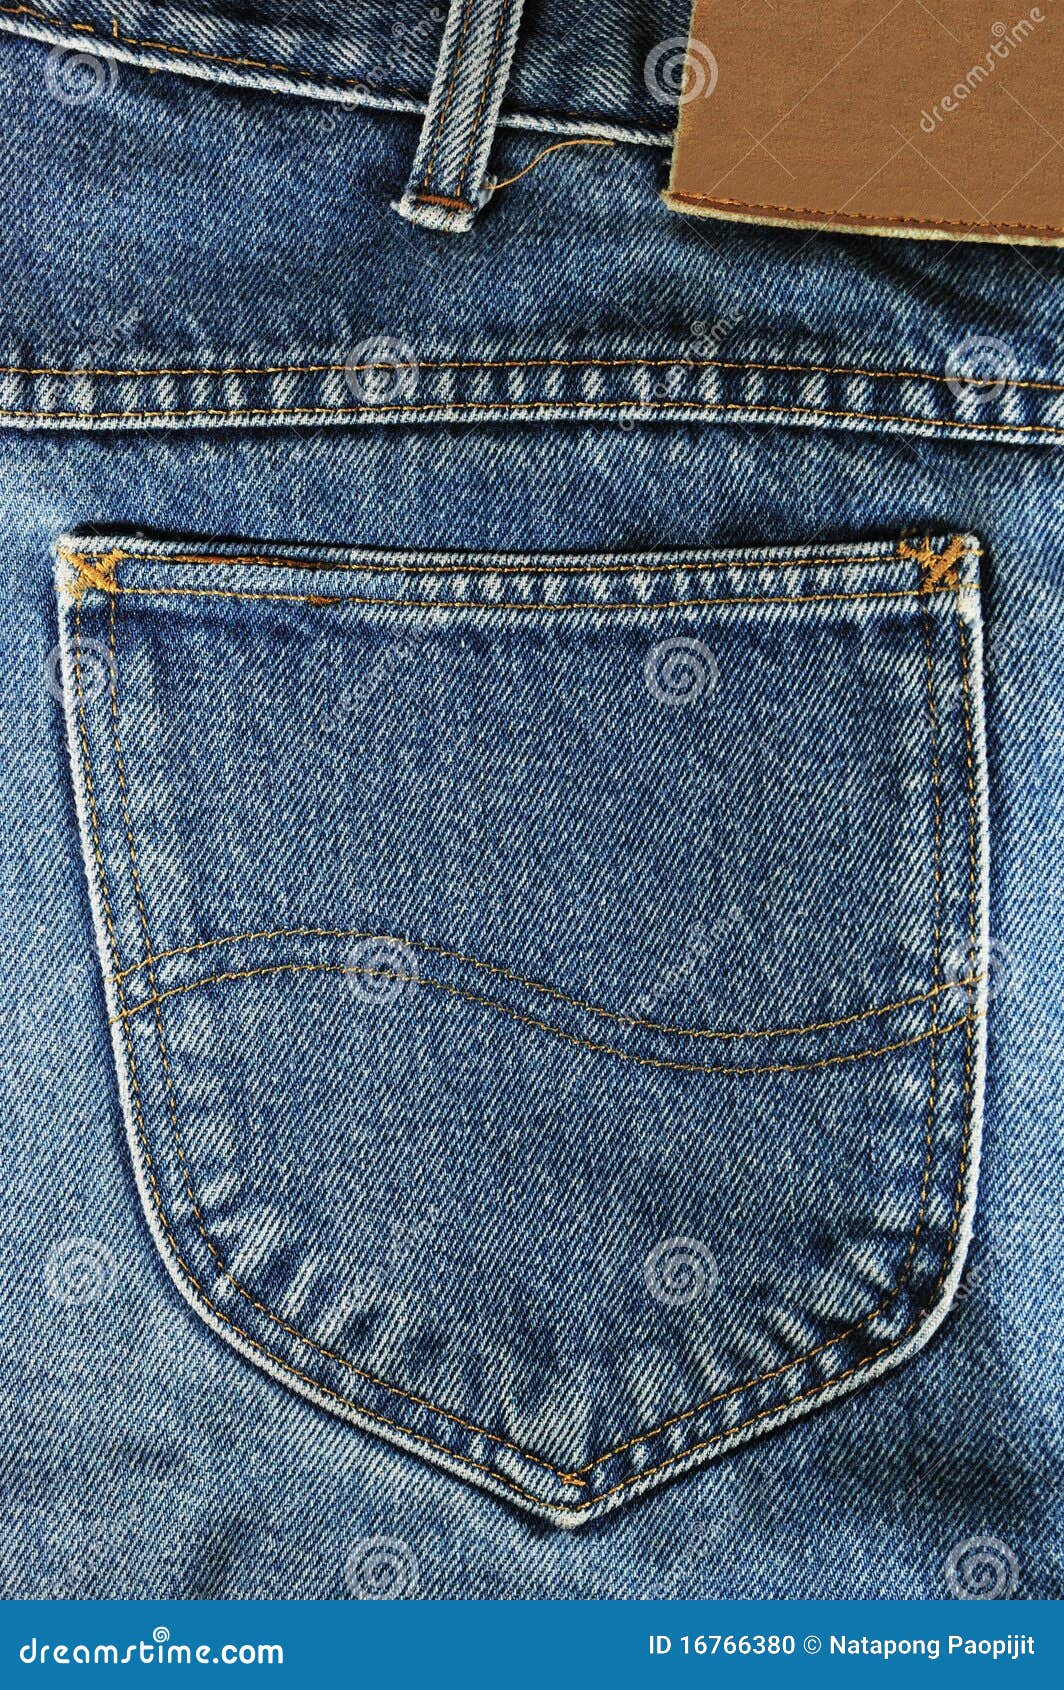 A blue jeans pocket stock photo. Image of fiber, garment - 16766380